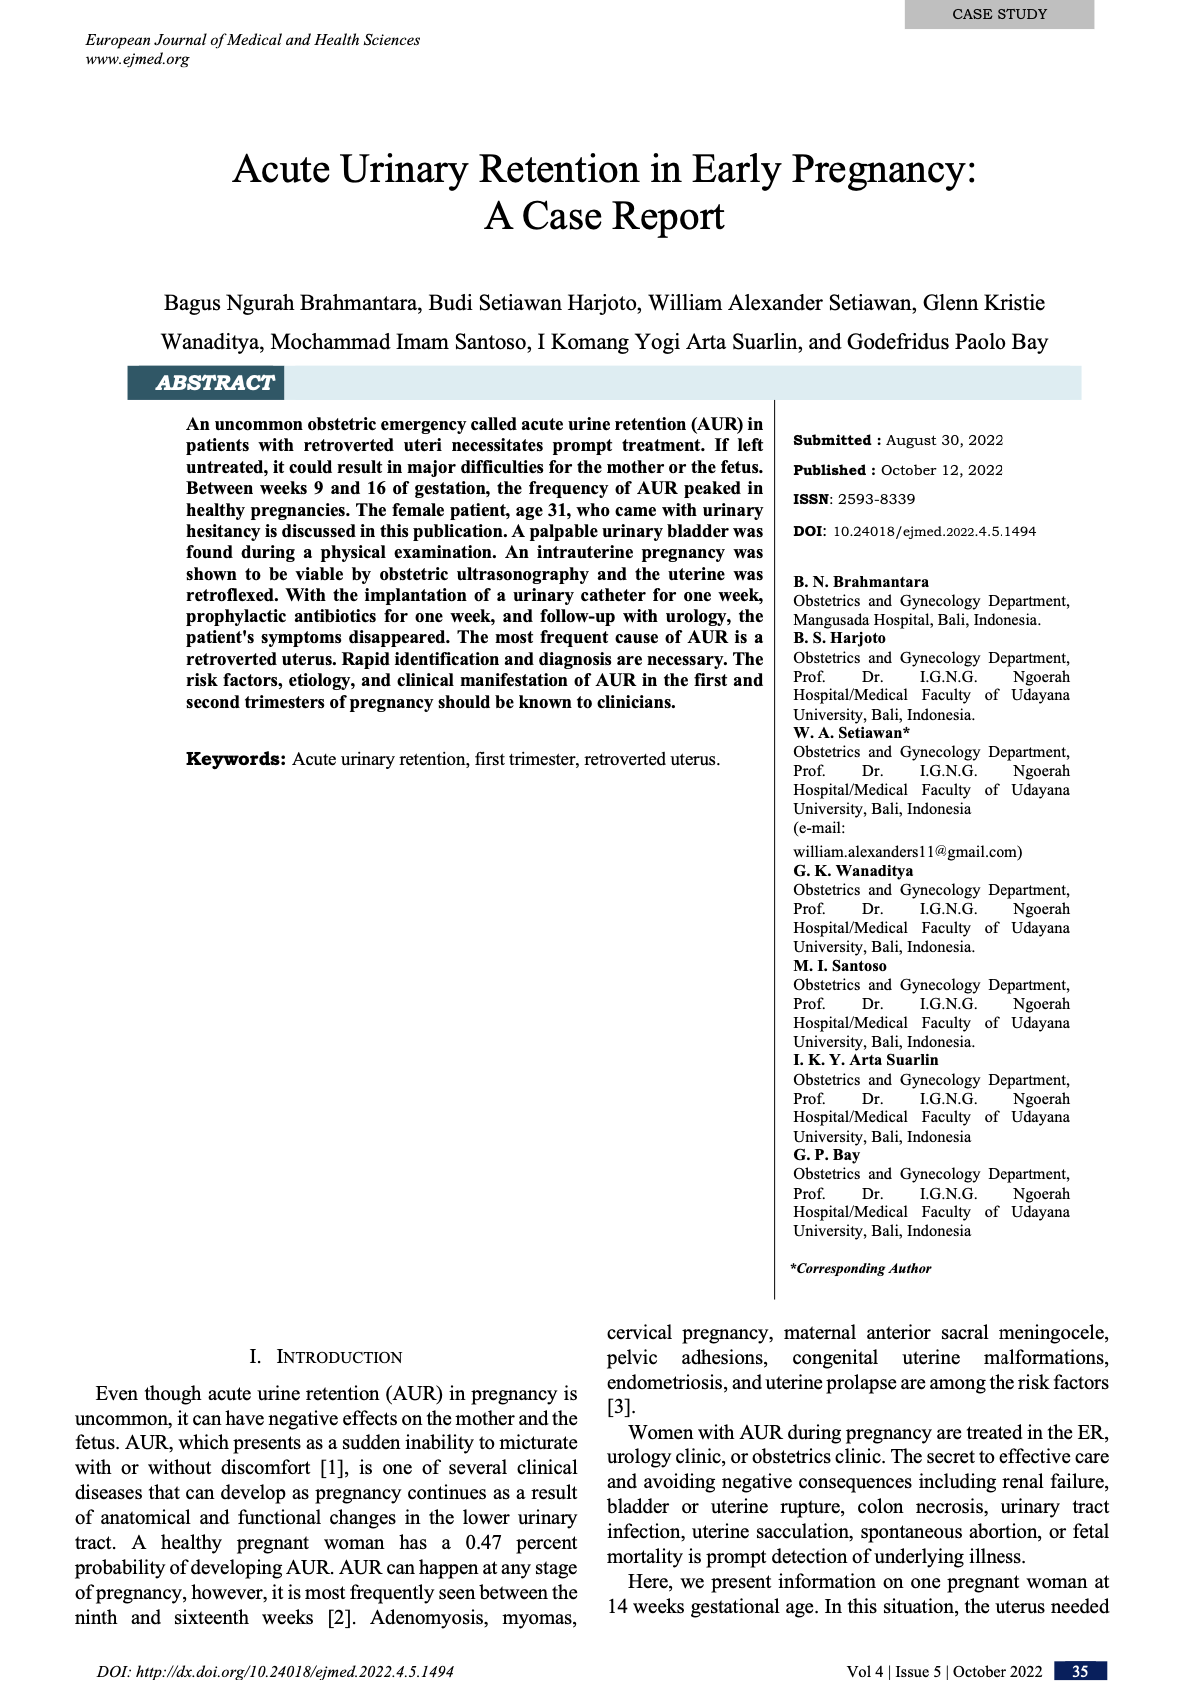 PDF) Urinary Retention in The Case of a Retroverted Uterus in